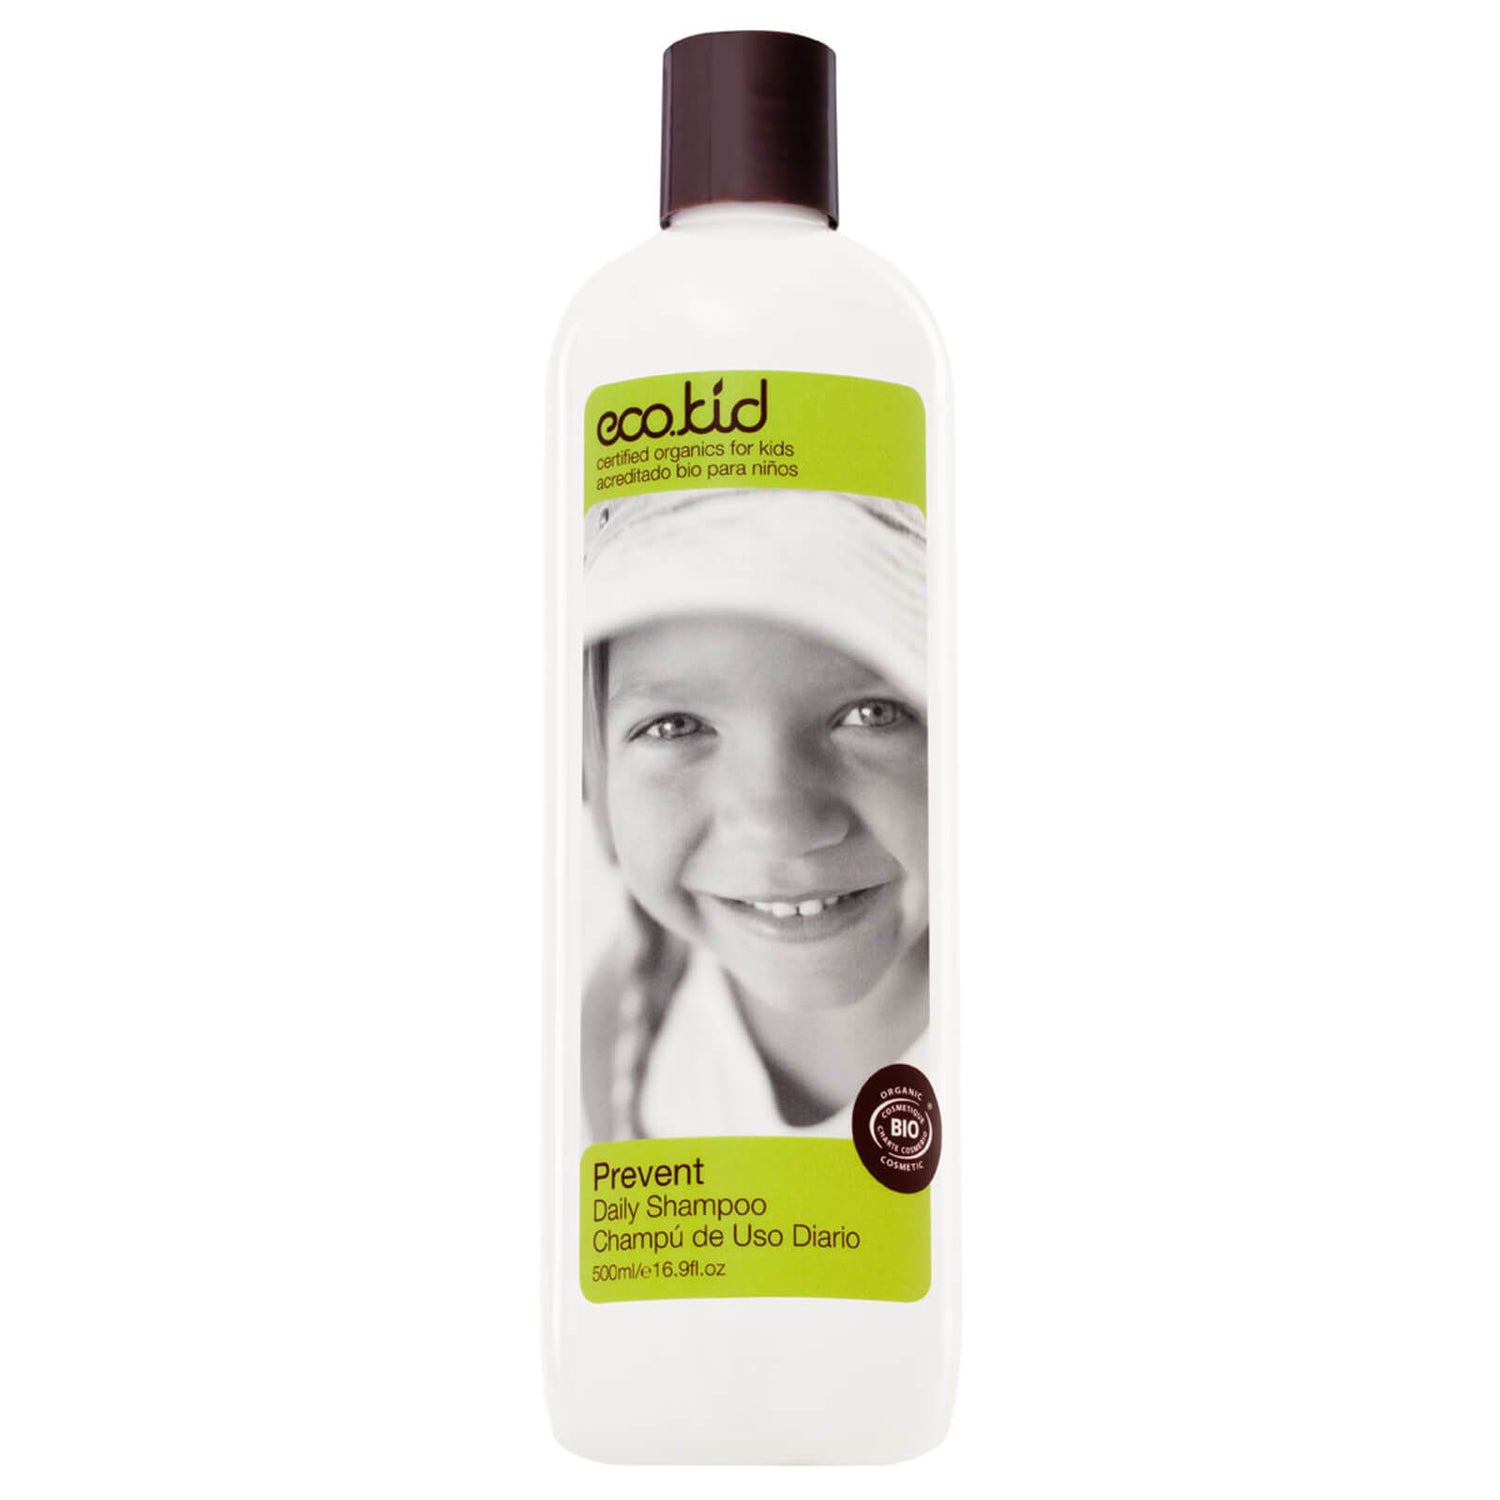 shabby samlet set Taktil sans eco.kid Prevent Daily Shampoo 500ml | Free US Shipping | lookfantastic